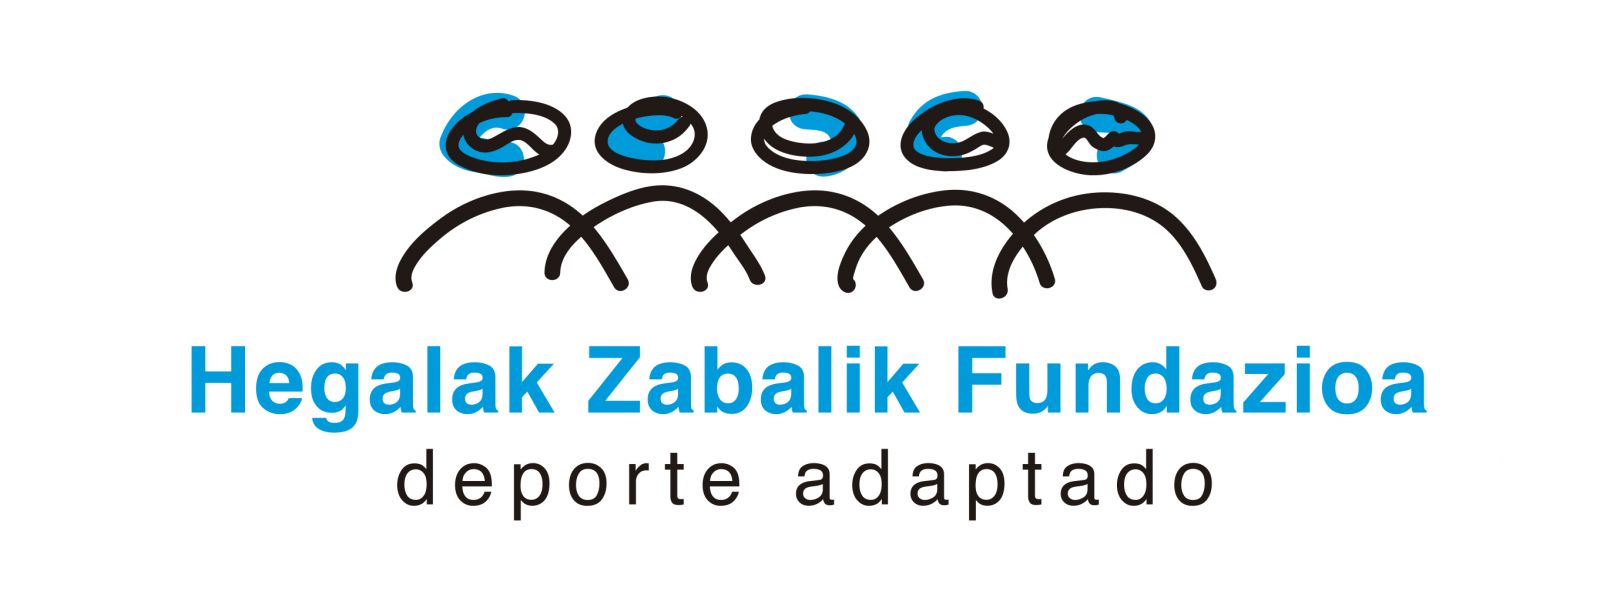 Hegalak Zabalik Foundation logo